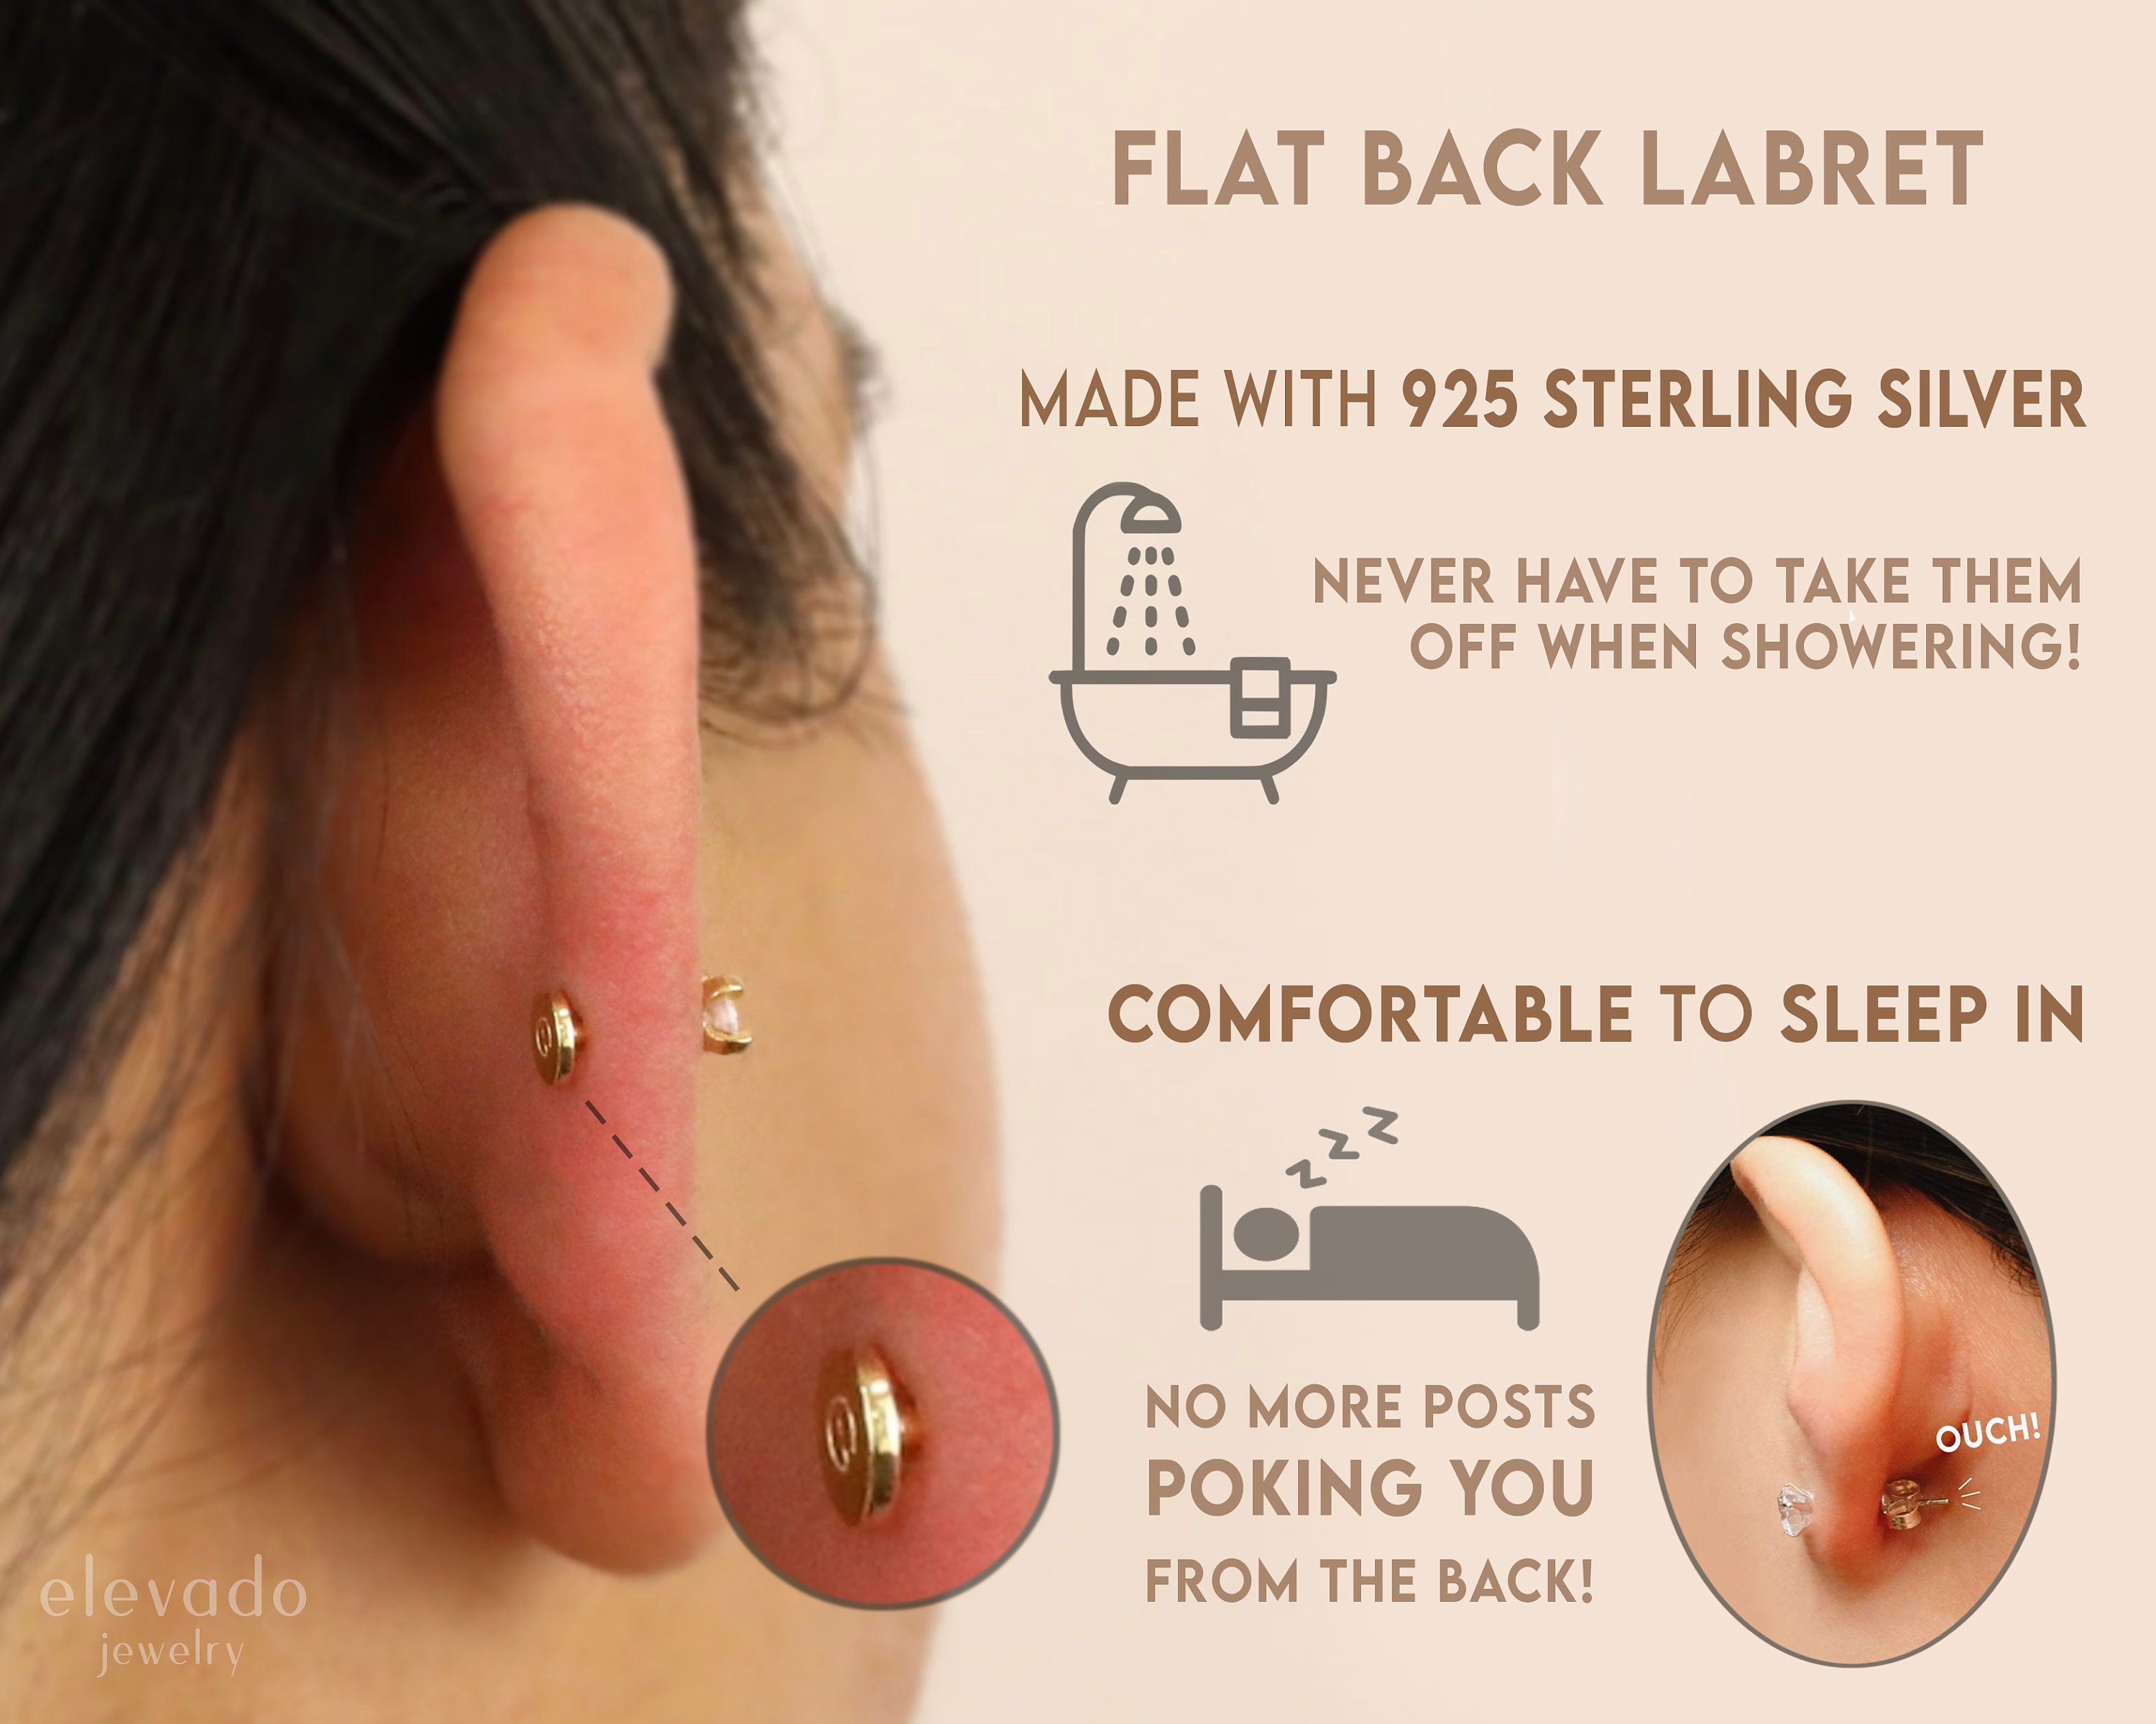 18g Helix piercing titanium flat back earring stud 5/16 length tragus –  Siren Body Jewelry